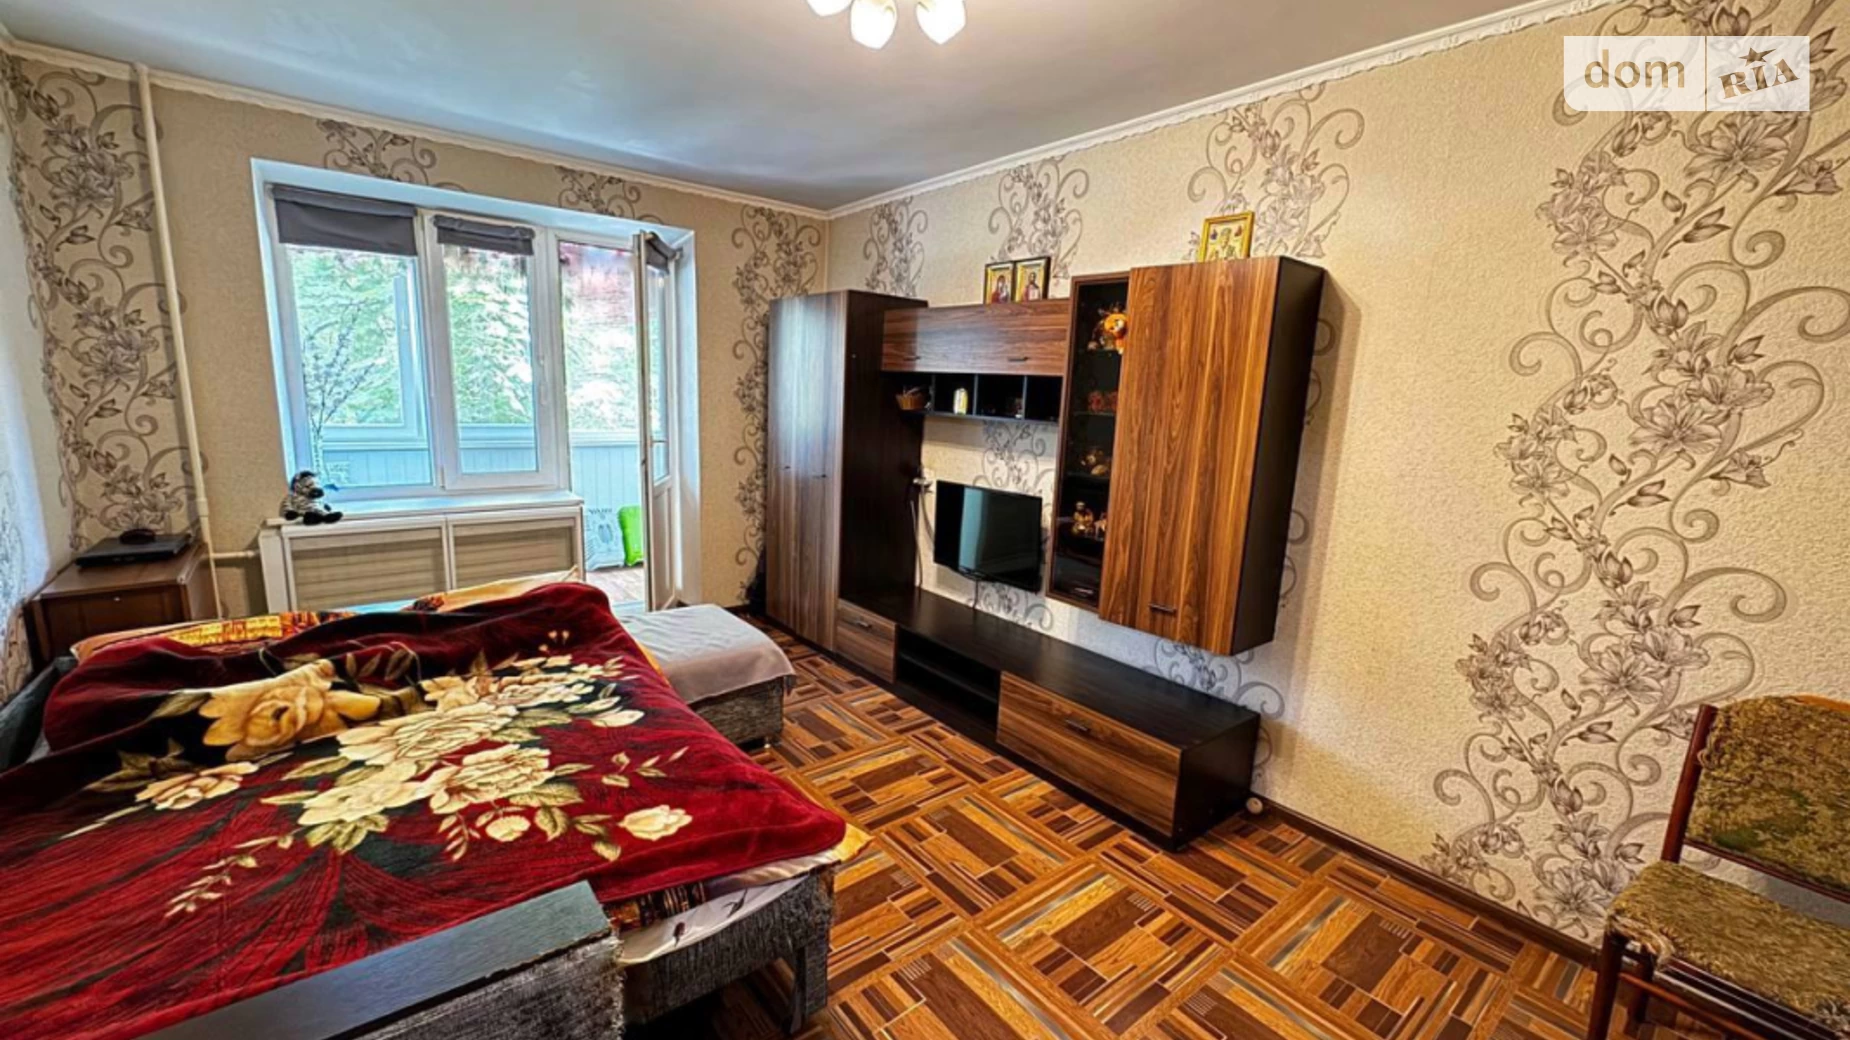 Продается 1-комнатная квартира 31 кв. м в Чернигове - фото 3